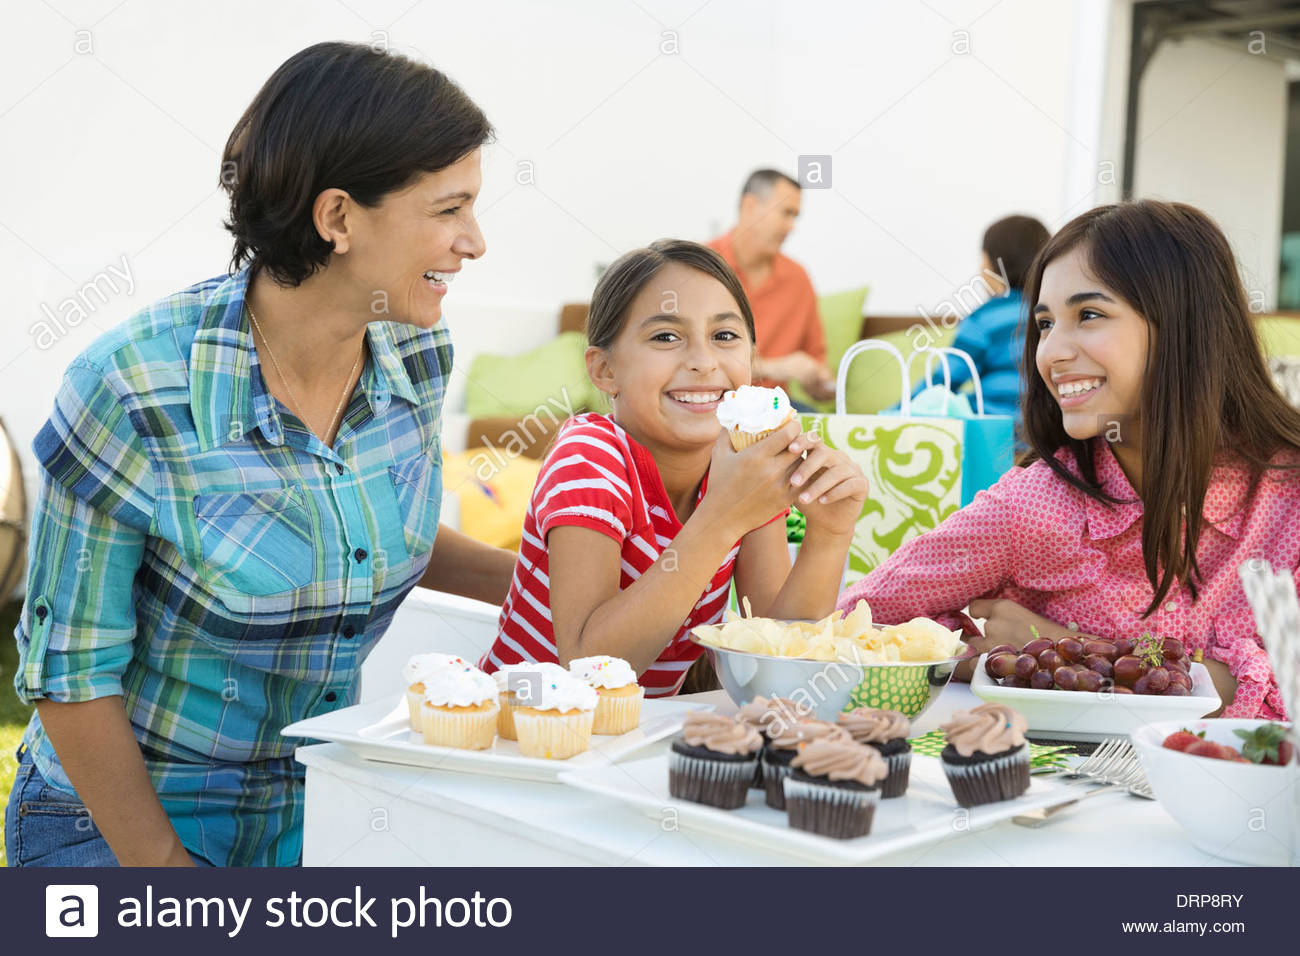 Portrait of girl enjoying birthday party with family Stock Photo